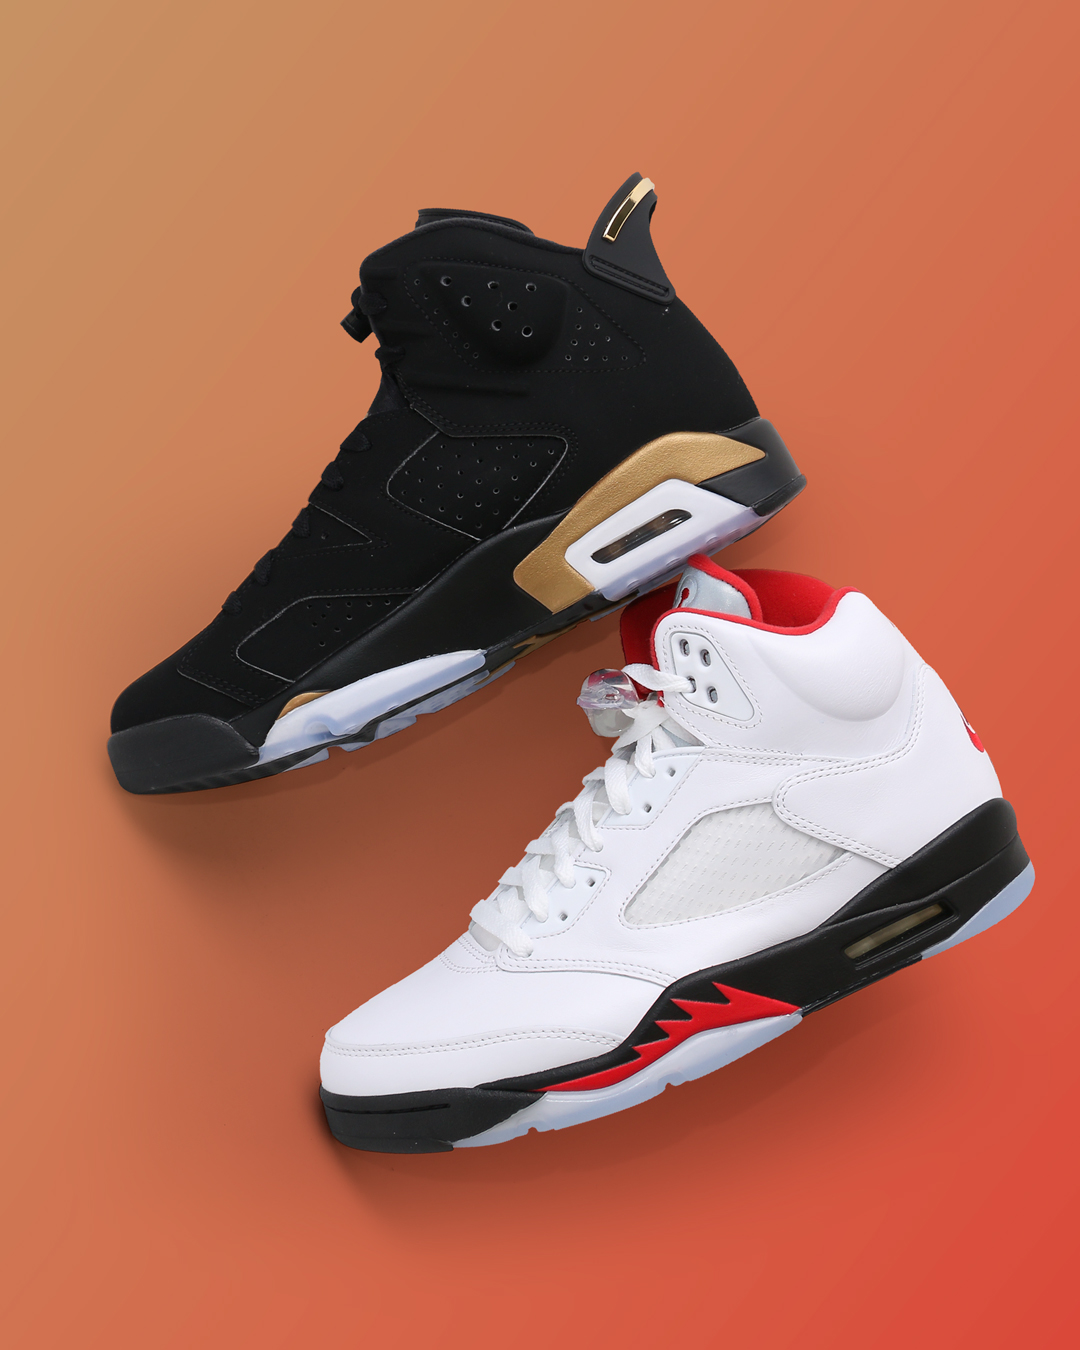 Hacer Ciudad Menda traducir KICKS CREW on Twitter: "2020 Jordan Fire Pack🏅: Nike Air Jordan 6 Retro  DMP and Nike Air Jordan 5 Retro Fire Red are now available on  https://t.co/M793X5vZg0! DMP: https://t.co/RsiQb6CDGp FireRed:  https://t.co/OkixZpd0yr #kickscrew #